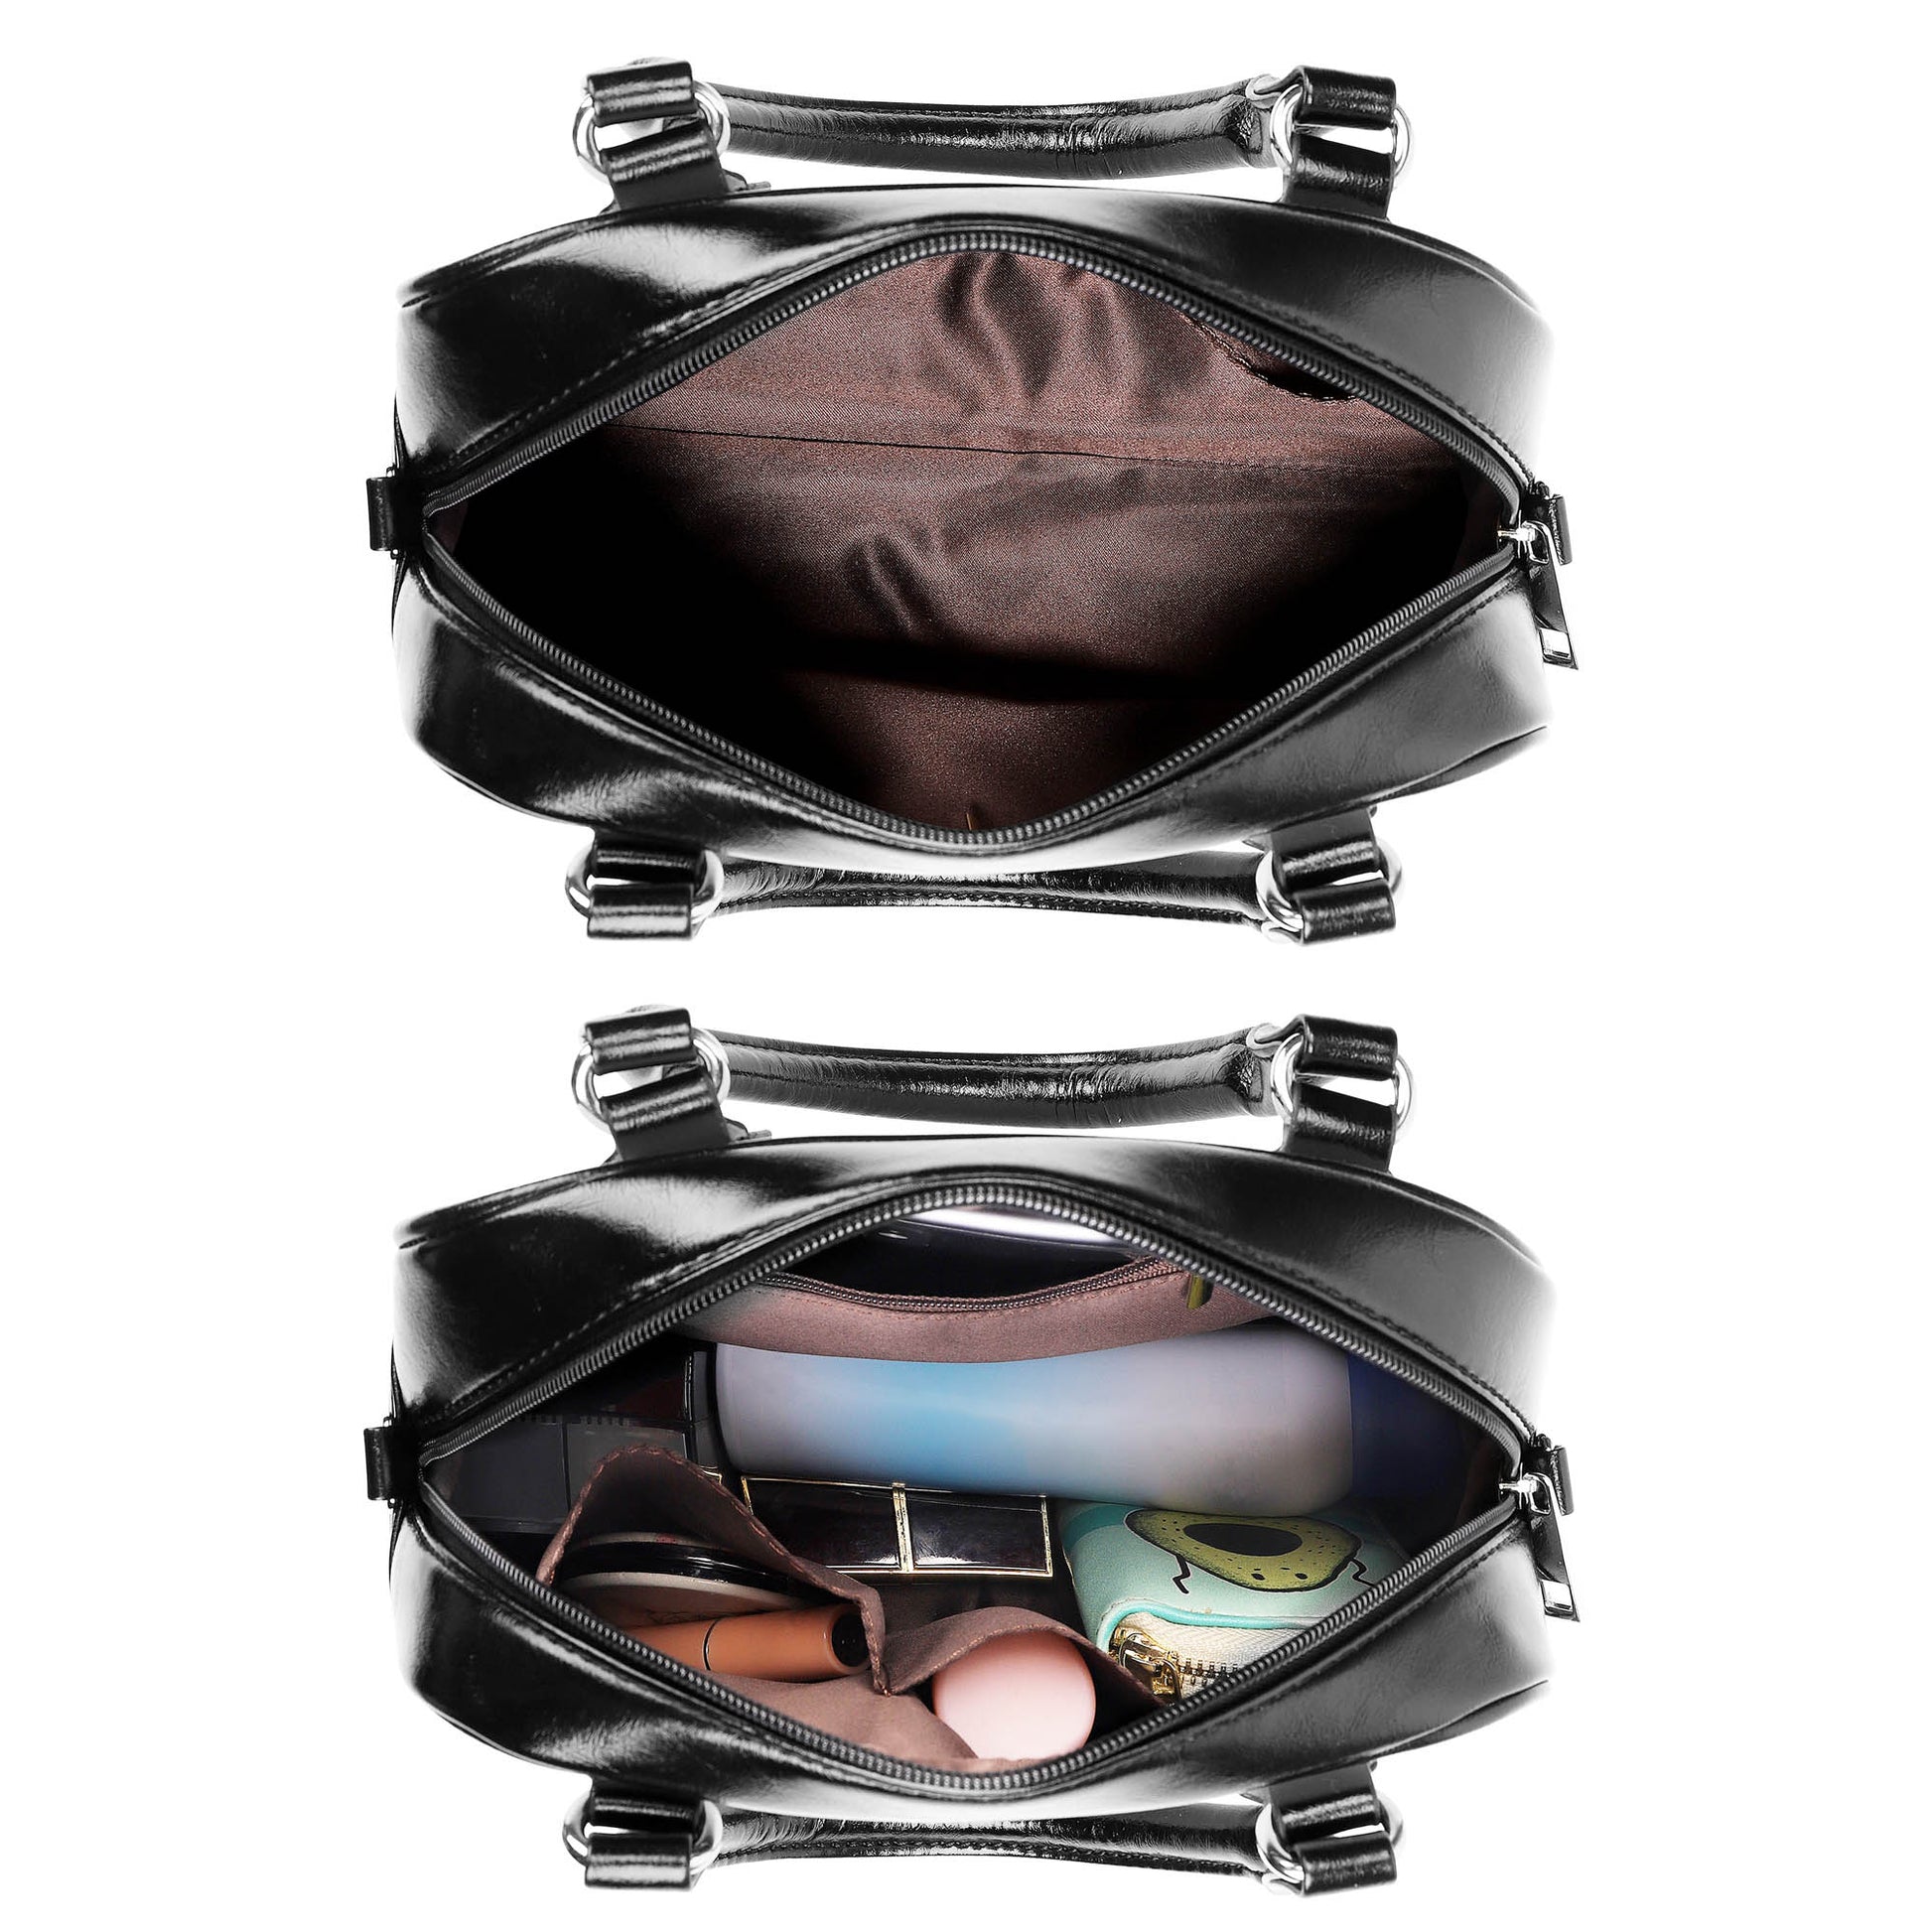 Halkerston Tartan Shoulder Handbags with Family Crest - Tartanvibesclothing